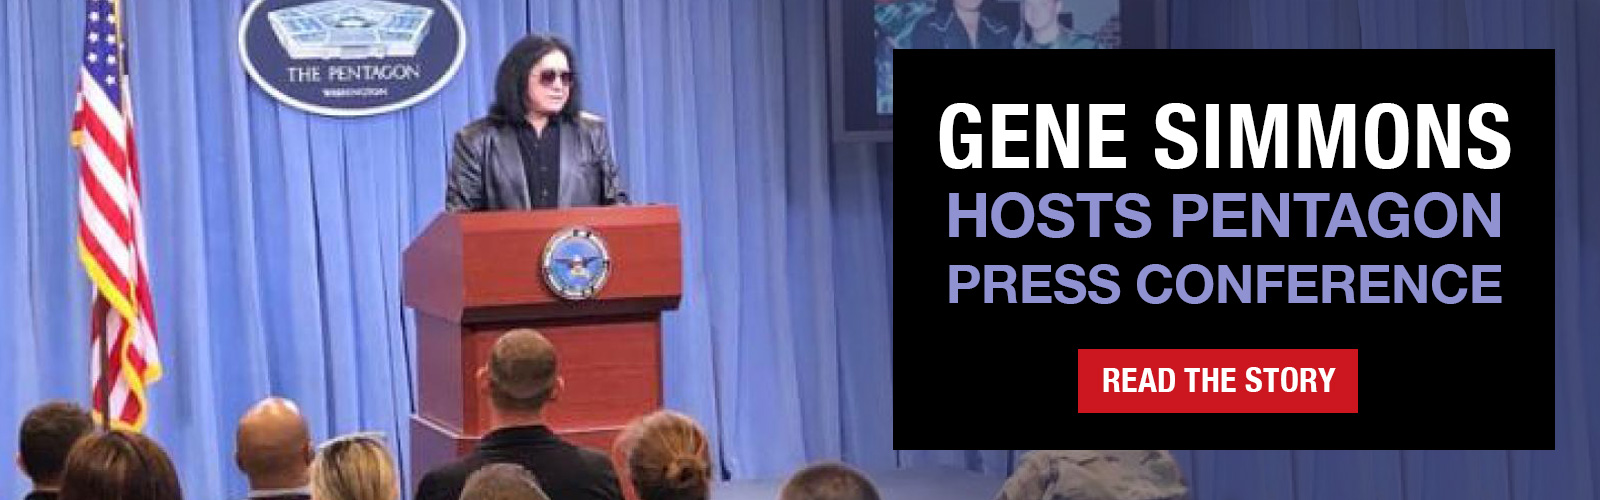 Gene Simmons hosts Pentagon Press Conference